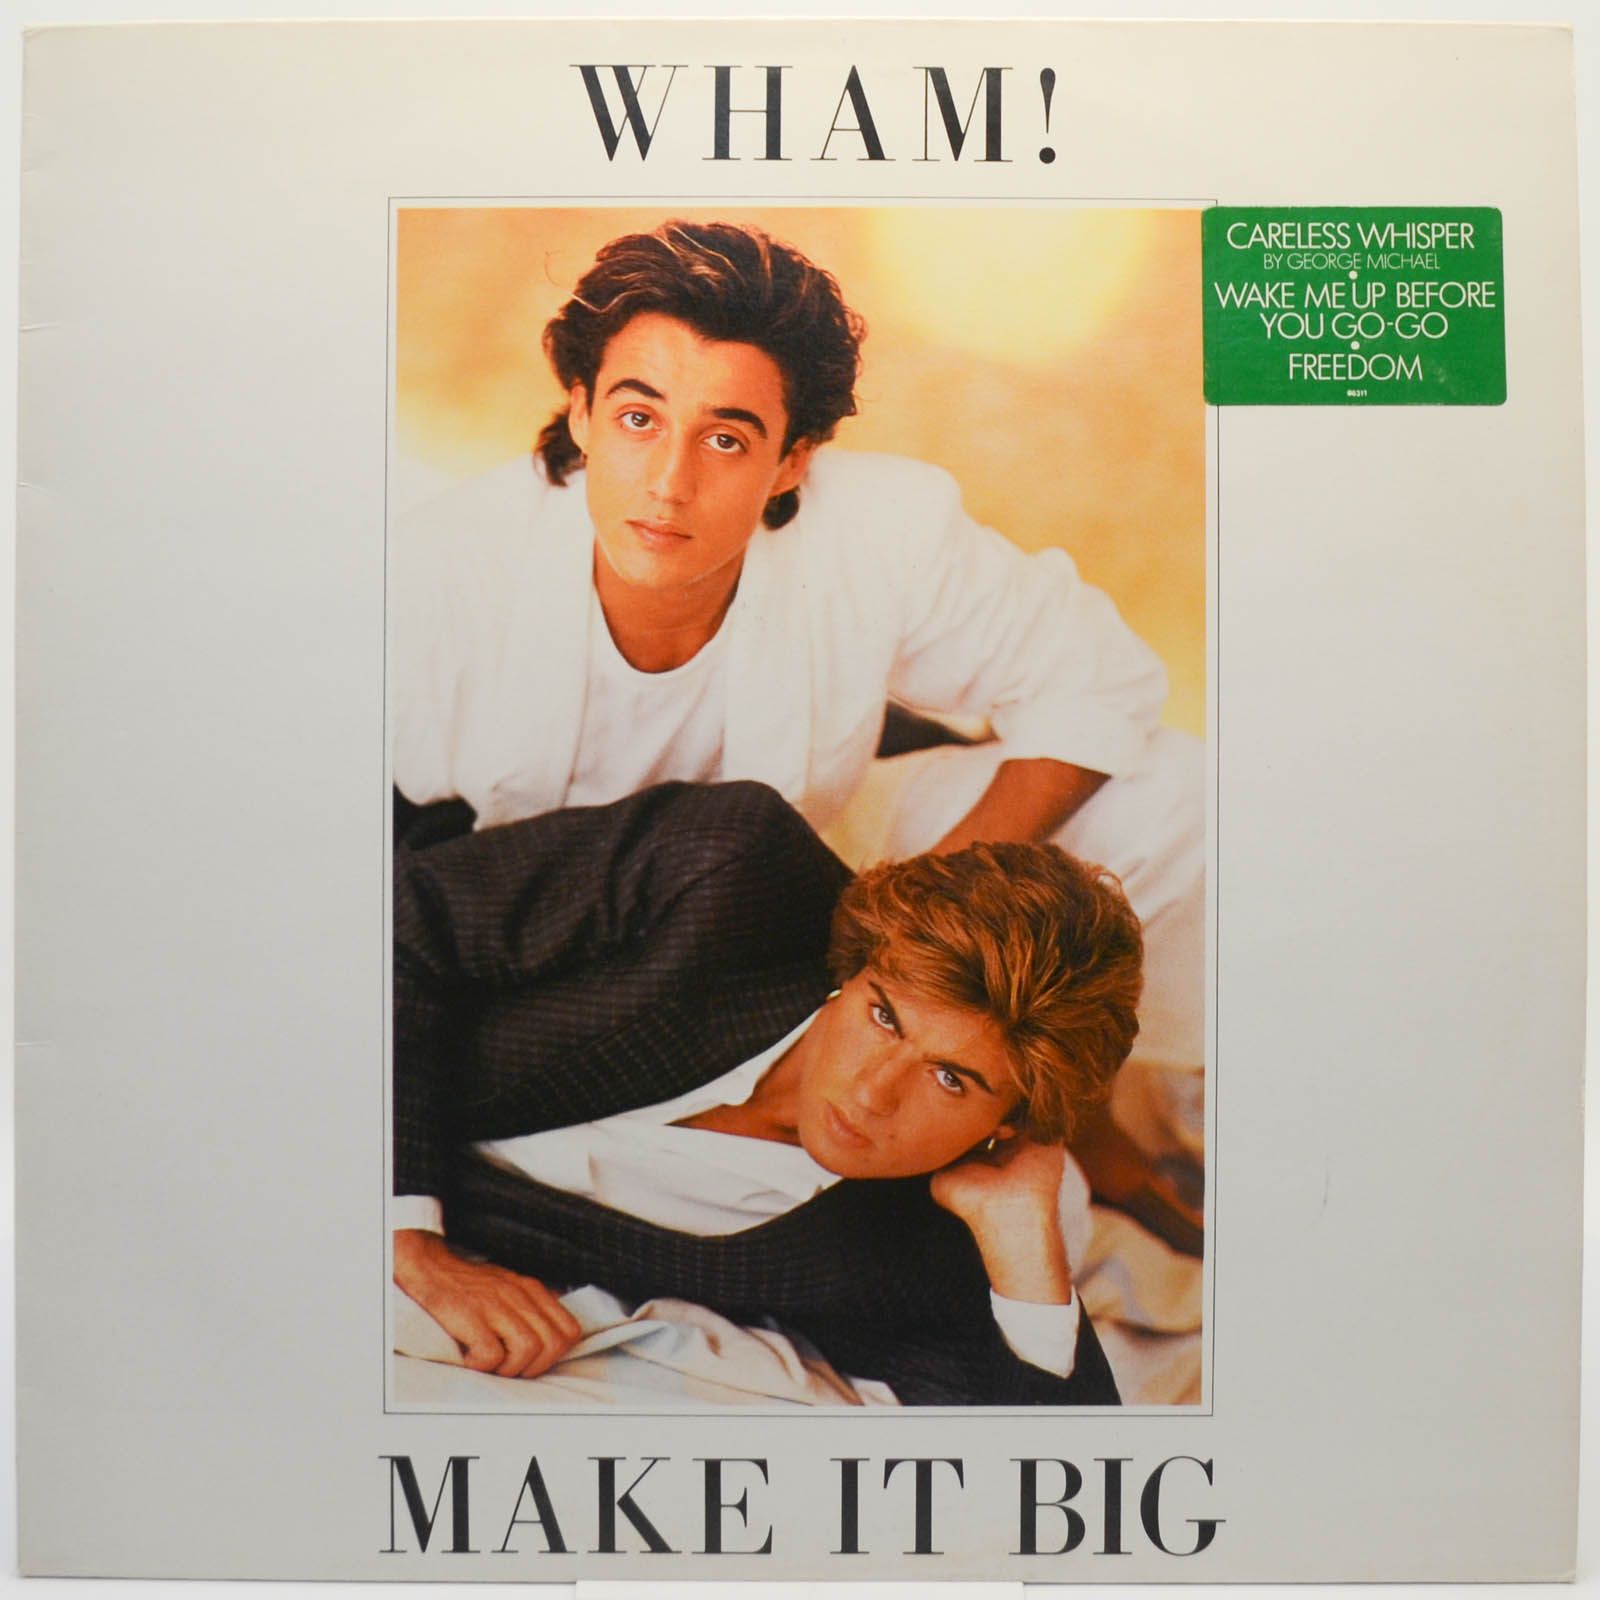 Wham! — Make It Big, 1984